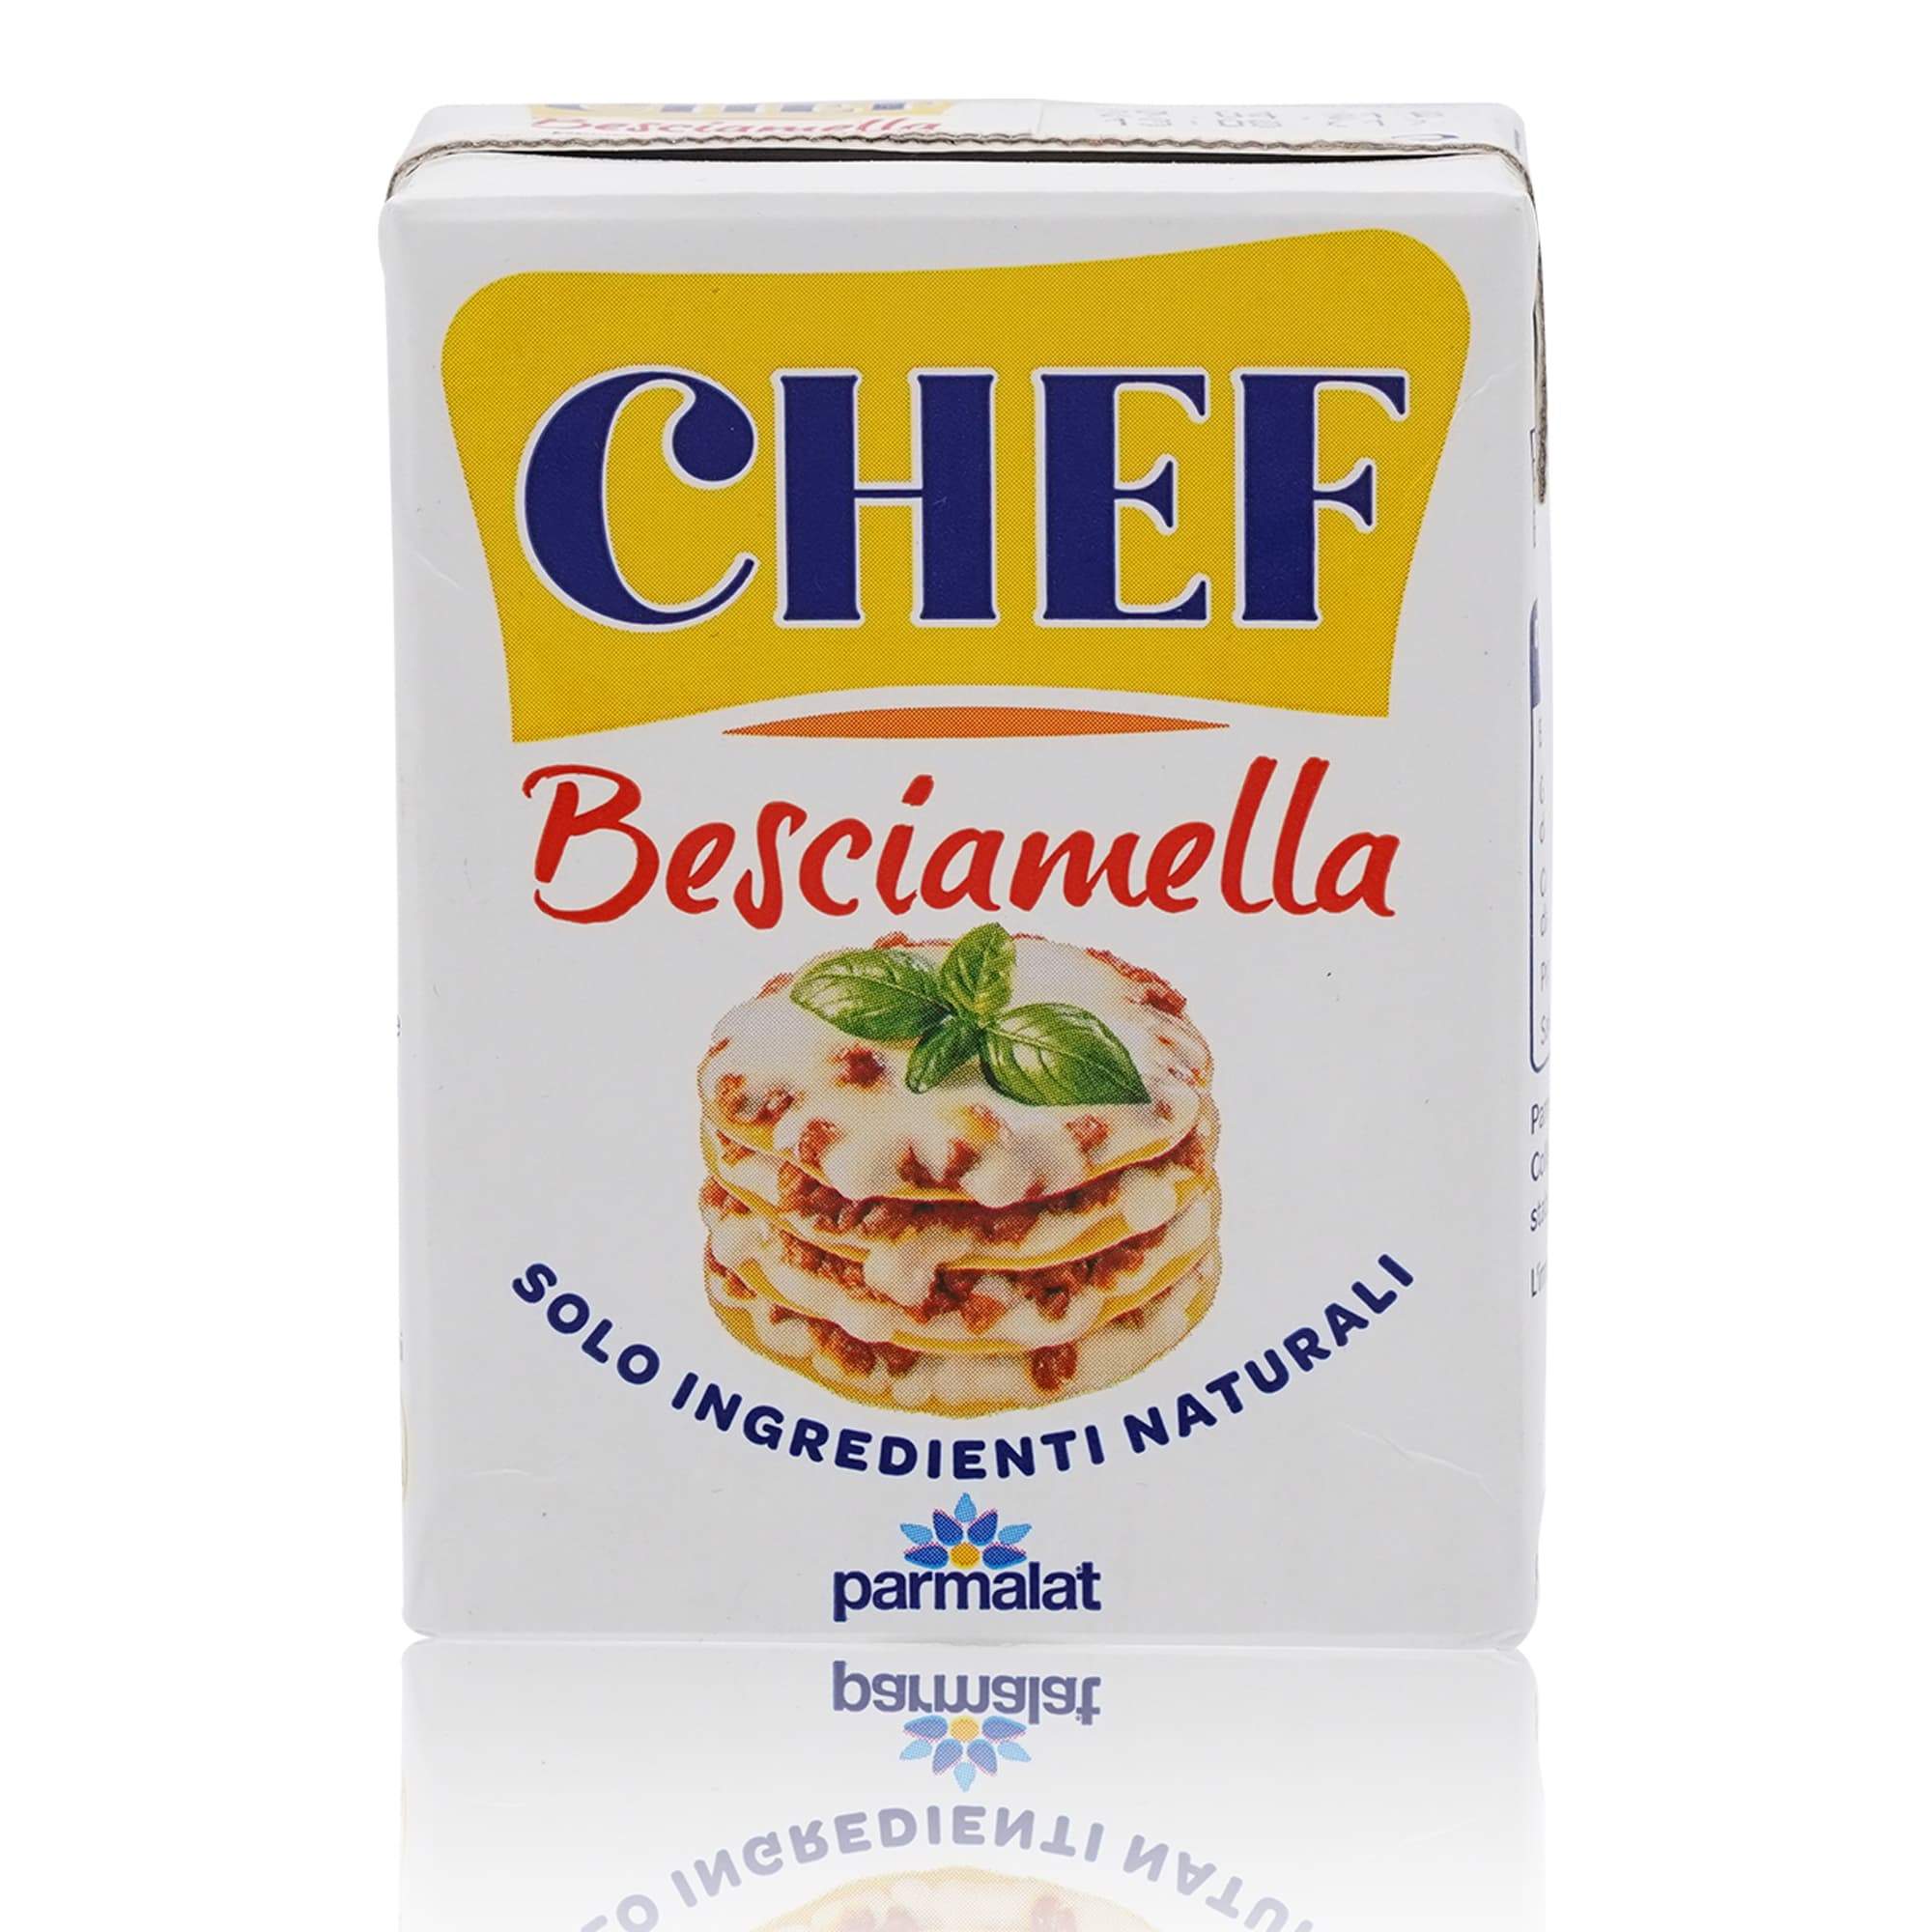 CHEF Besciamella – Béchamelsosse - 0,200l